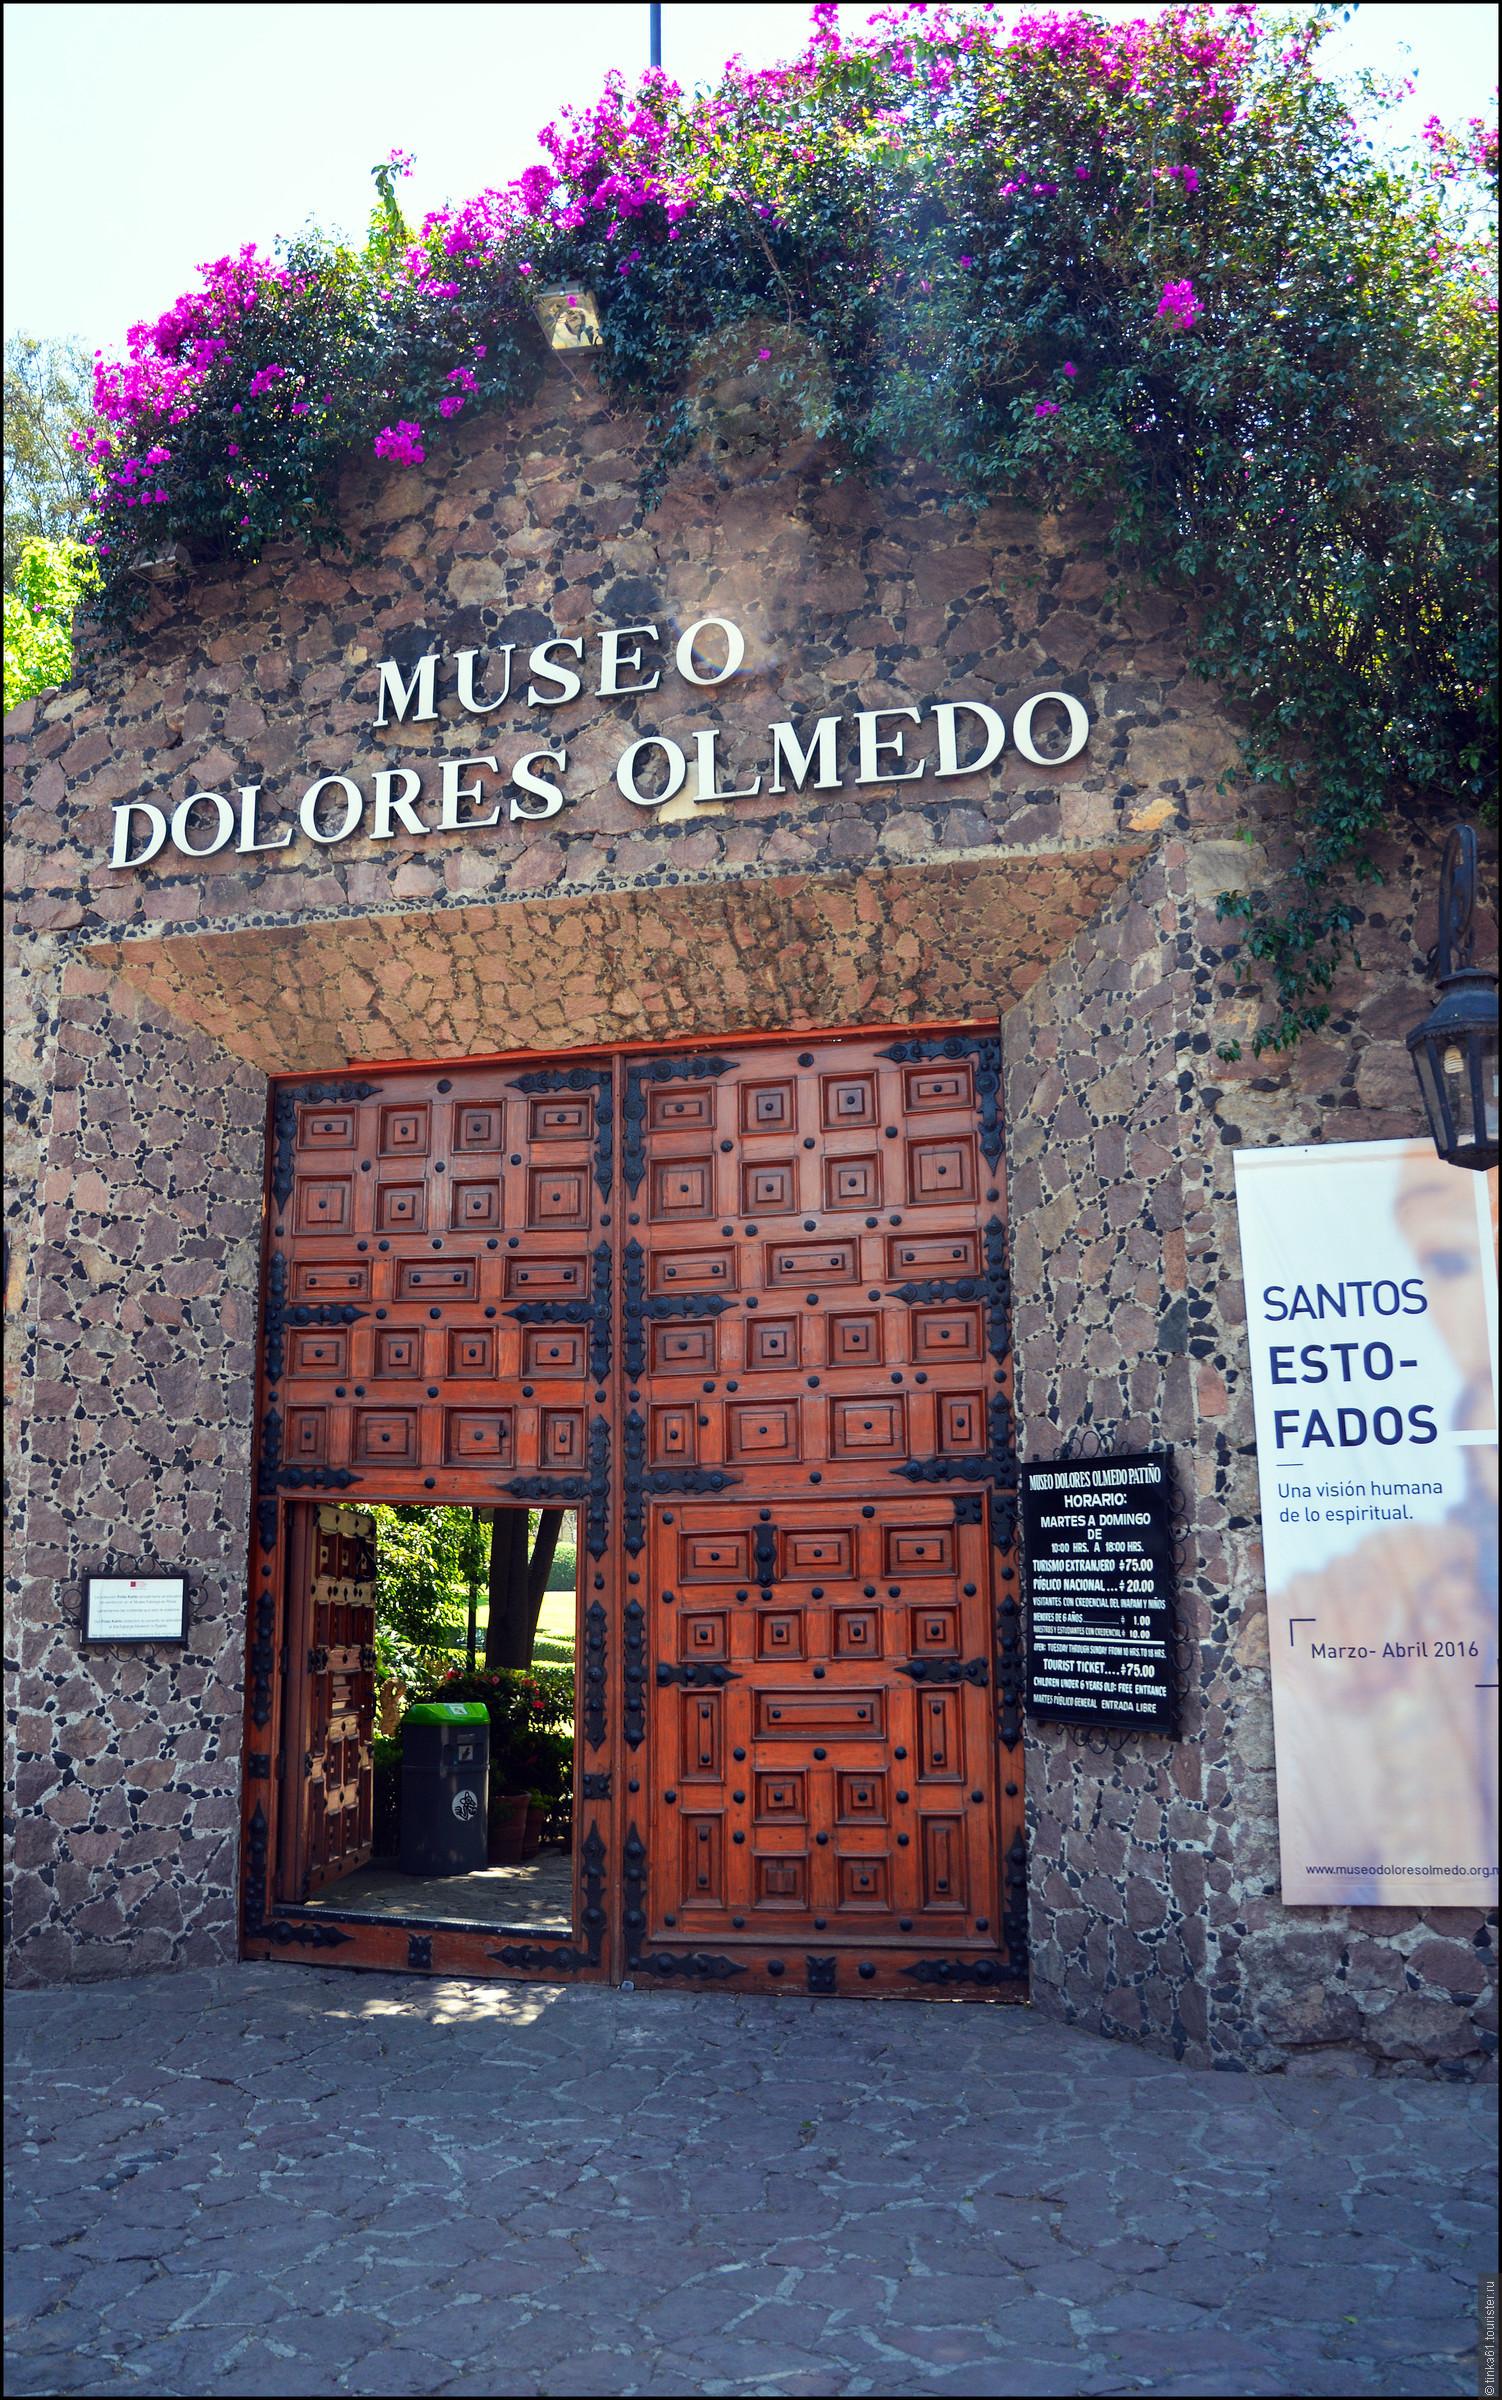 Музей Долорес Ольмедо-Патино